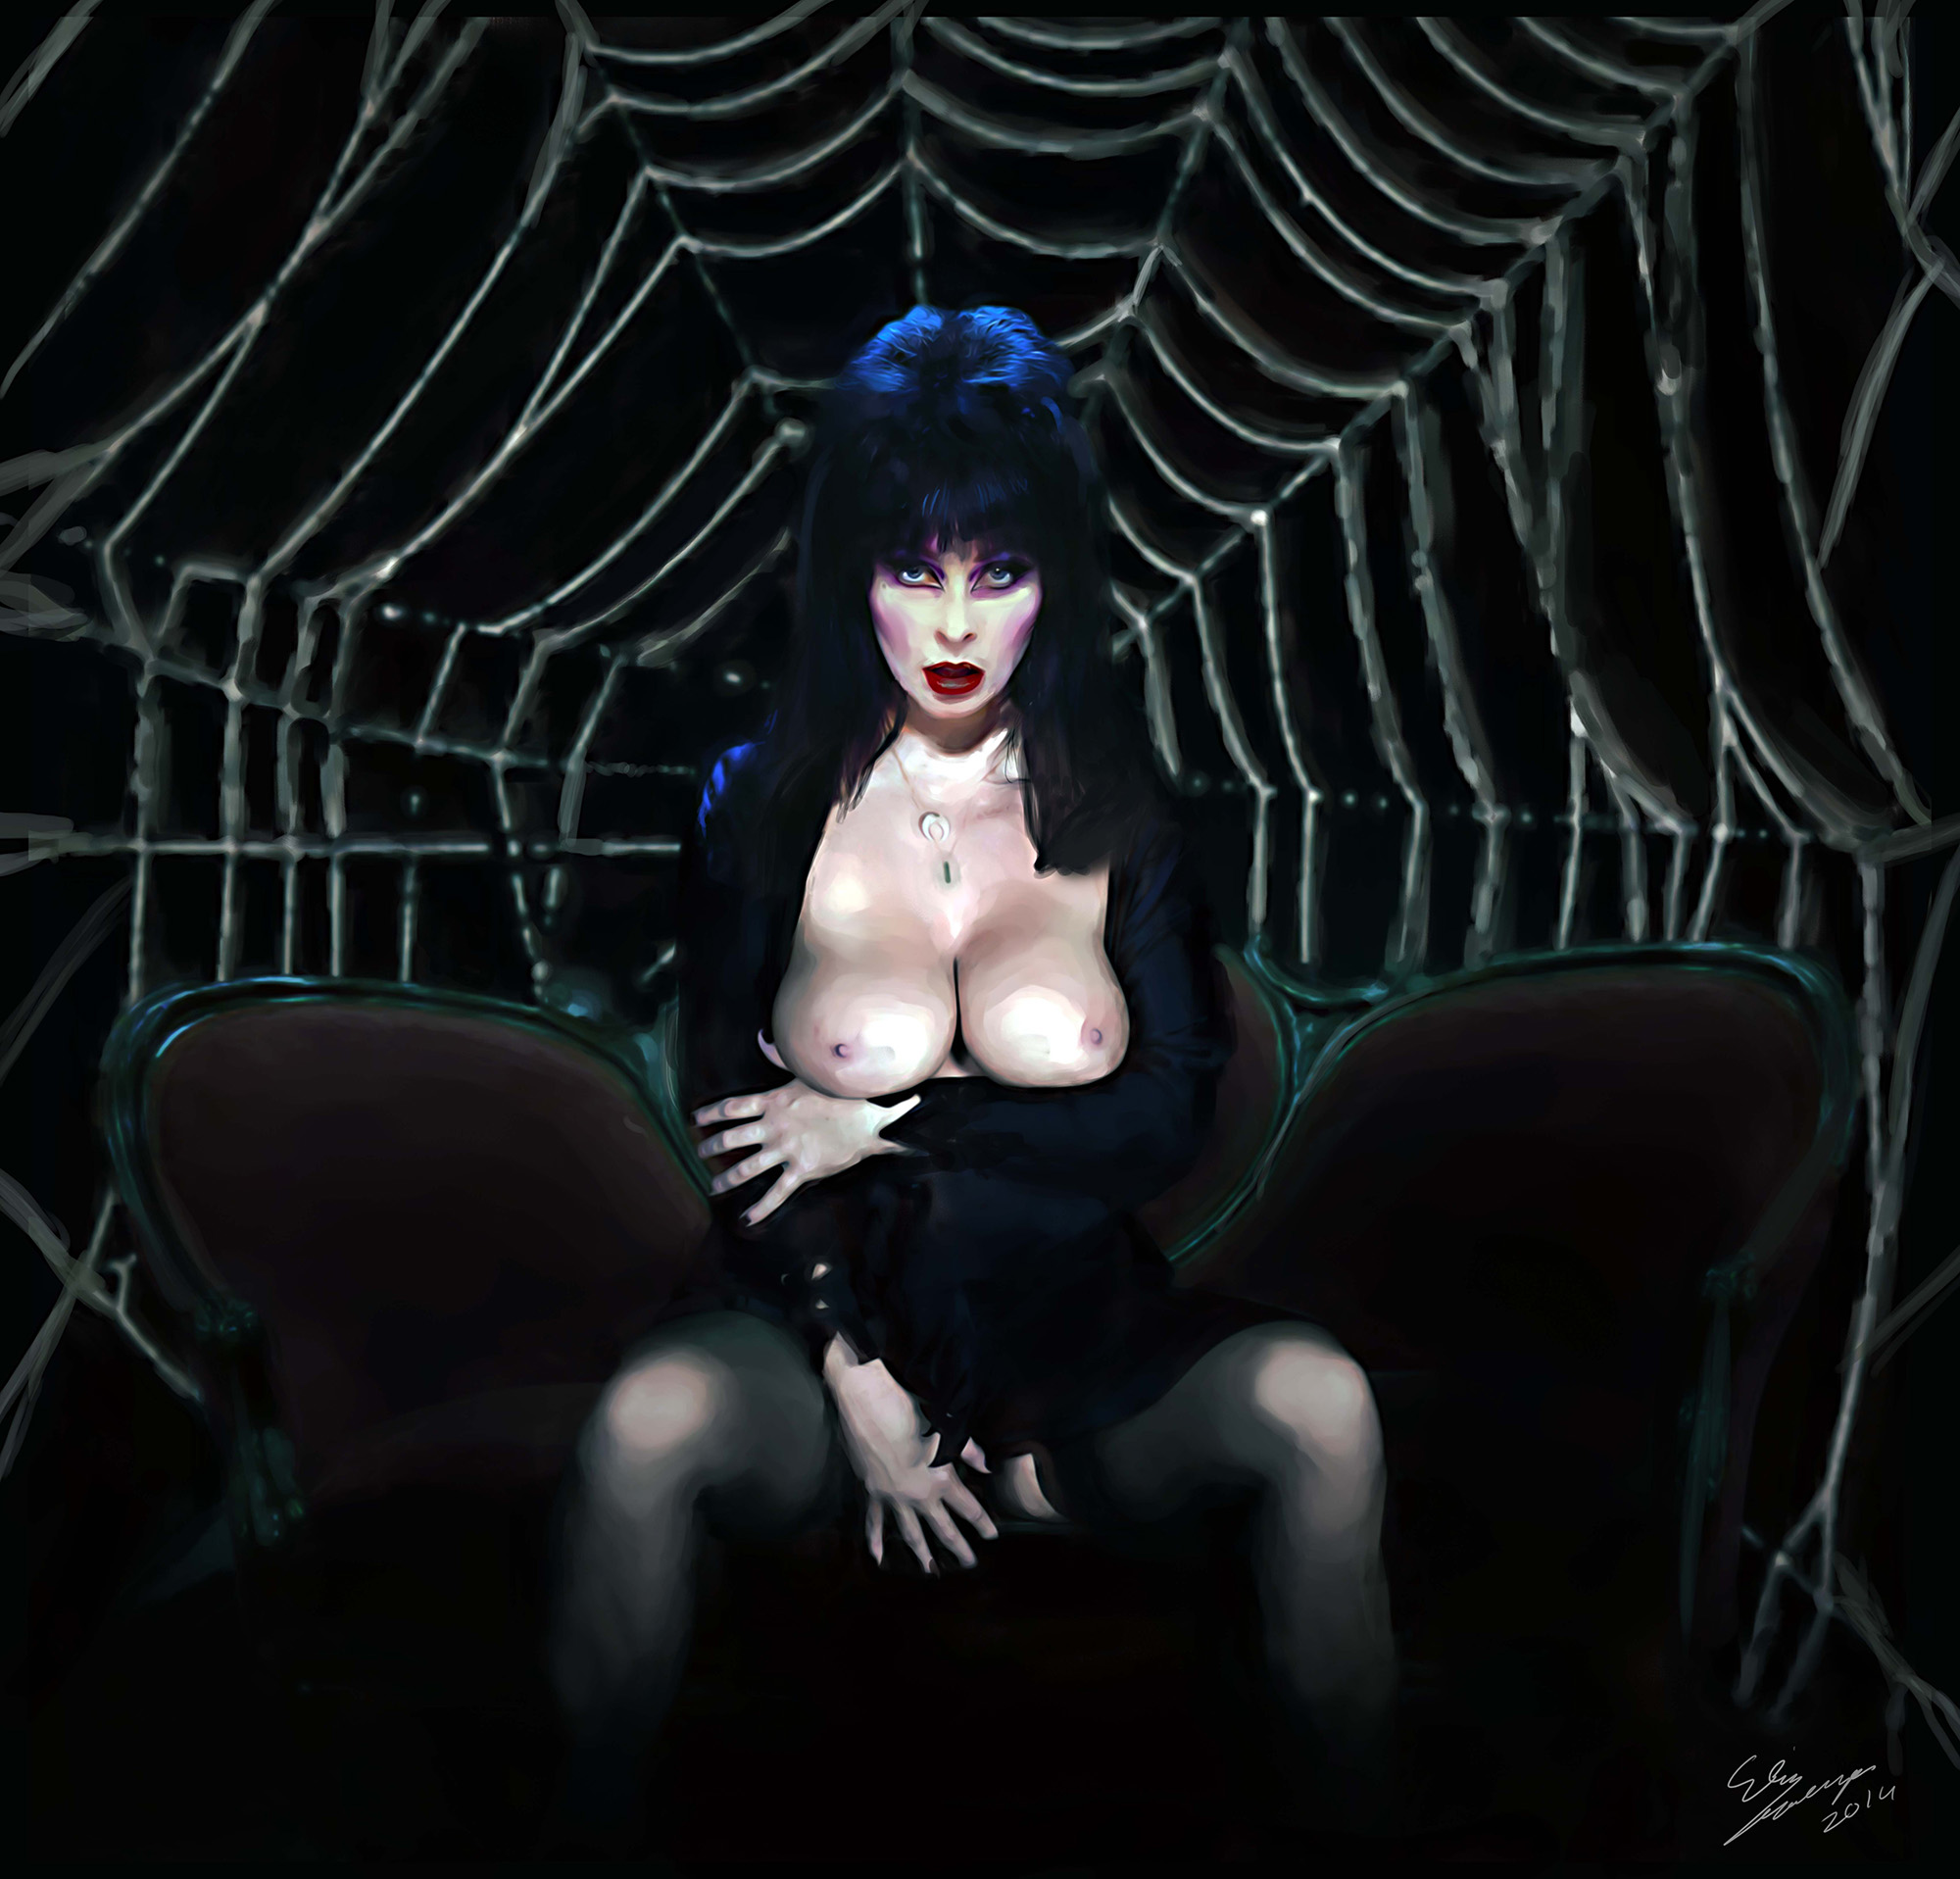 Elvira Porn - Elvira, Mistress of the Dark Rule 34 [17 Pics!] â€“ Nerd Porn!